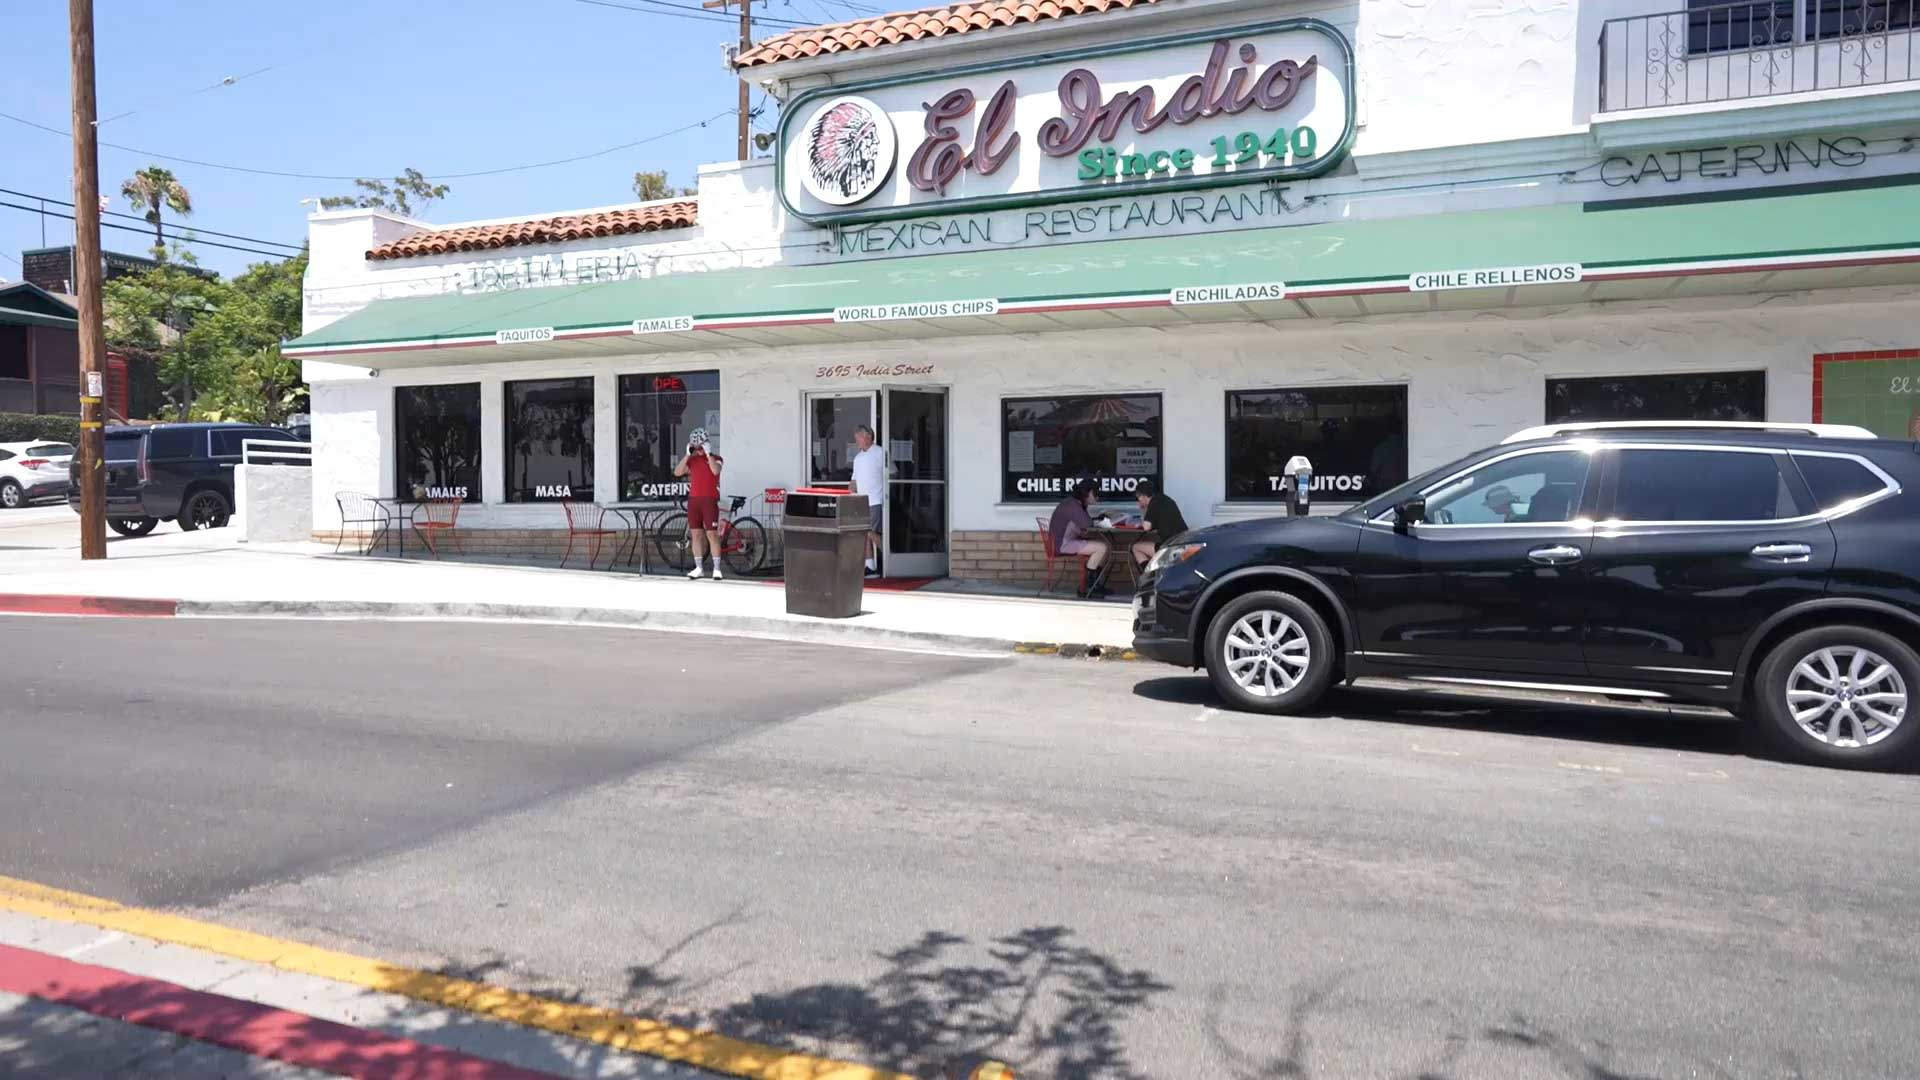 El Indio Mexican Restaurant - Middletown, San Diego, CA